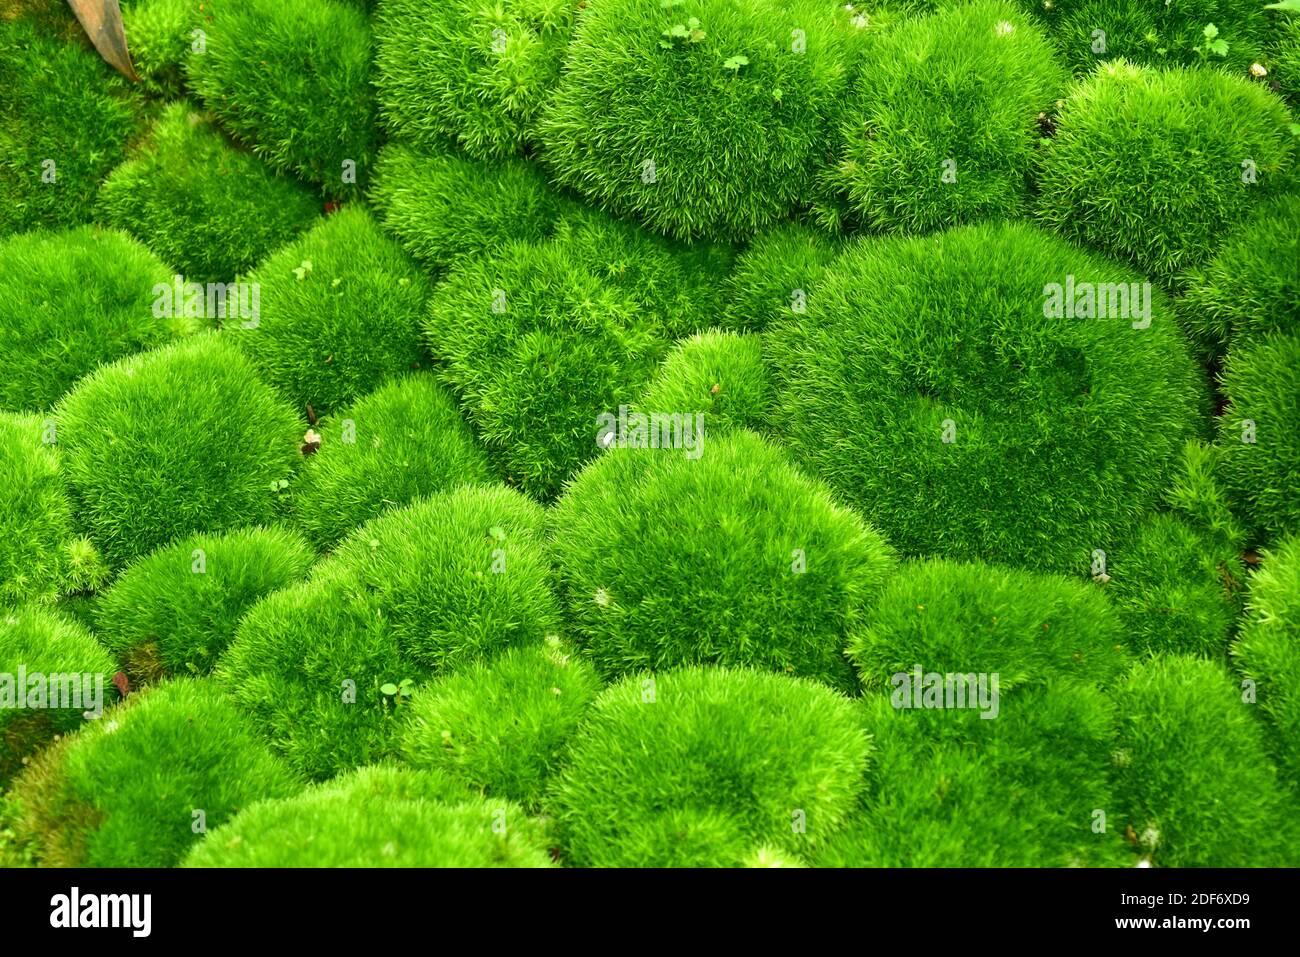 pincushion-moss-leucobryum-glaucum-is-an-evergreen-cushion-moss-2DF6XD9.jpg